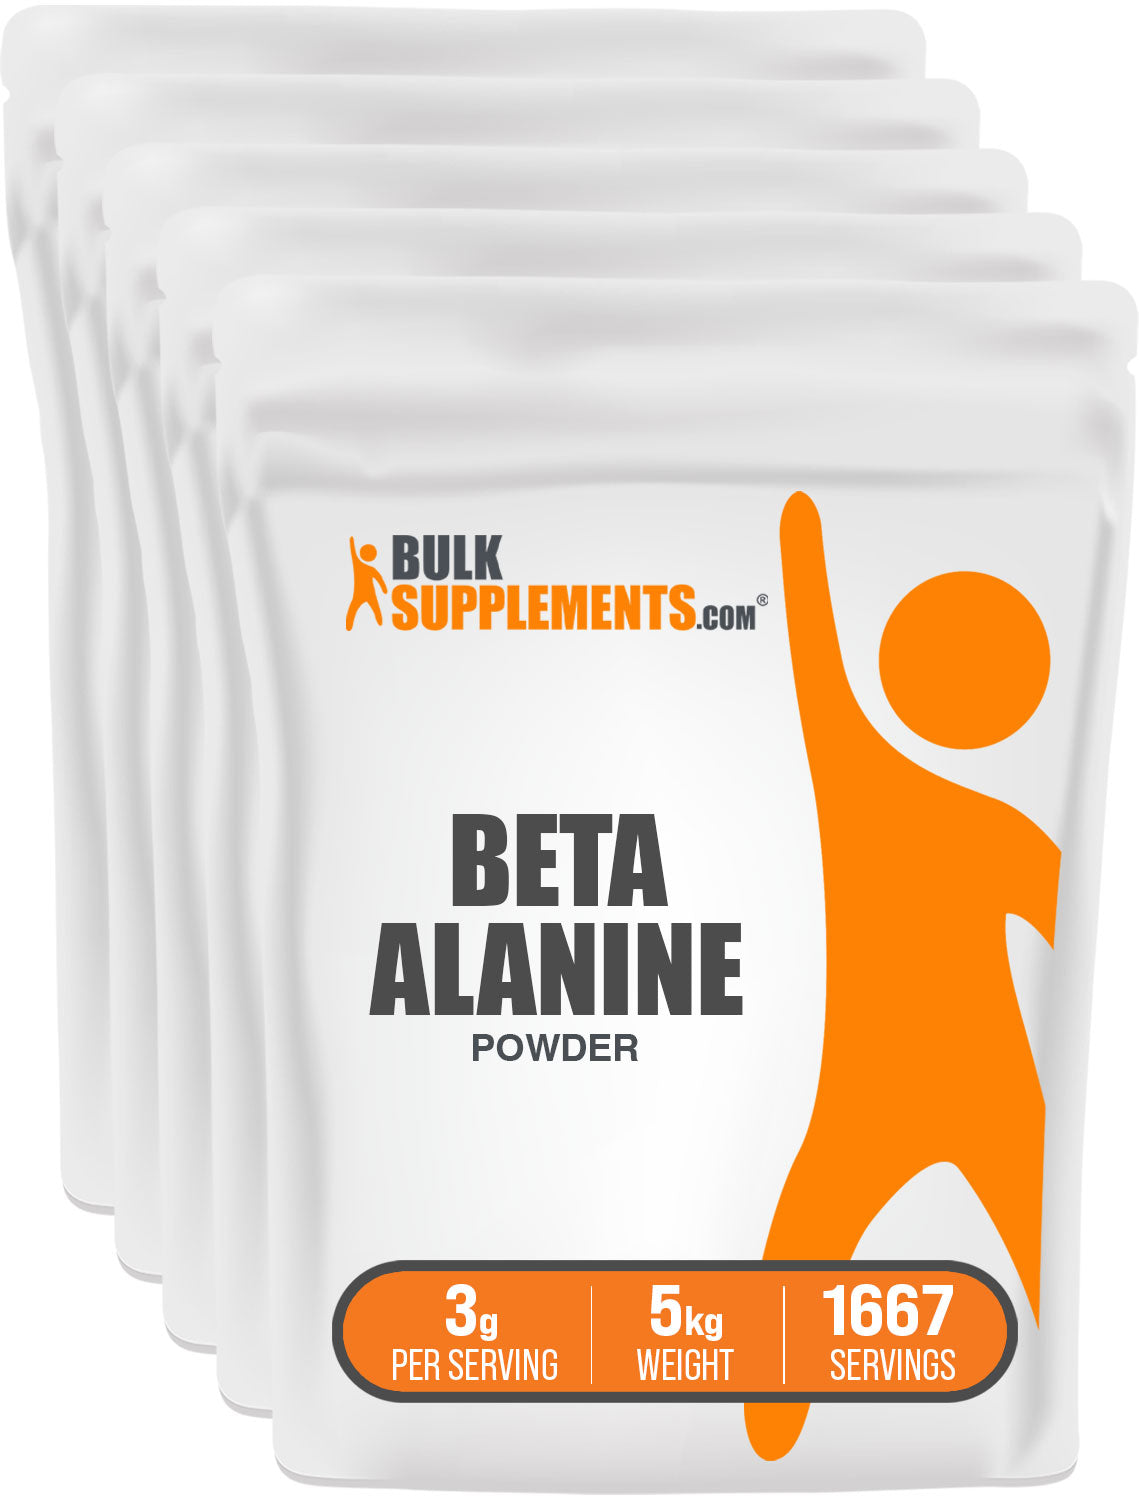 Beta Alanine powder 5kg bags